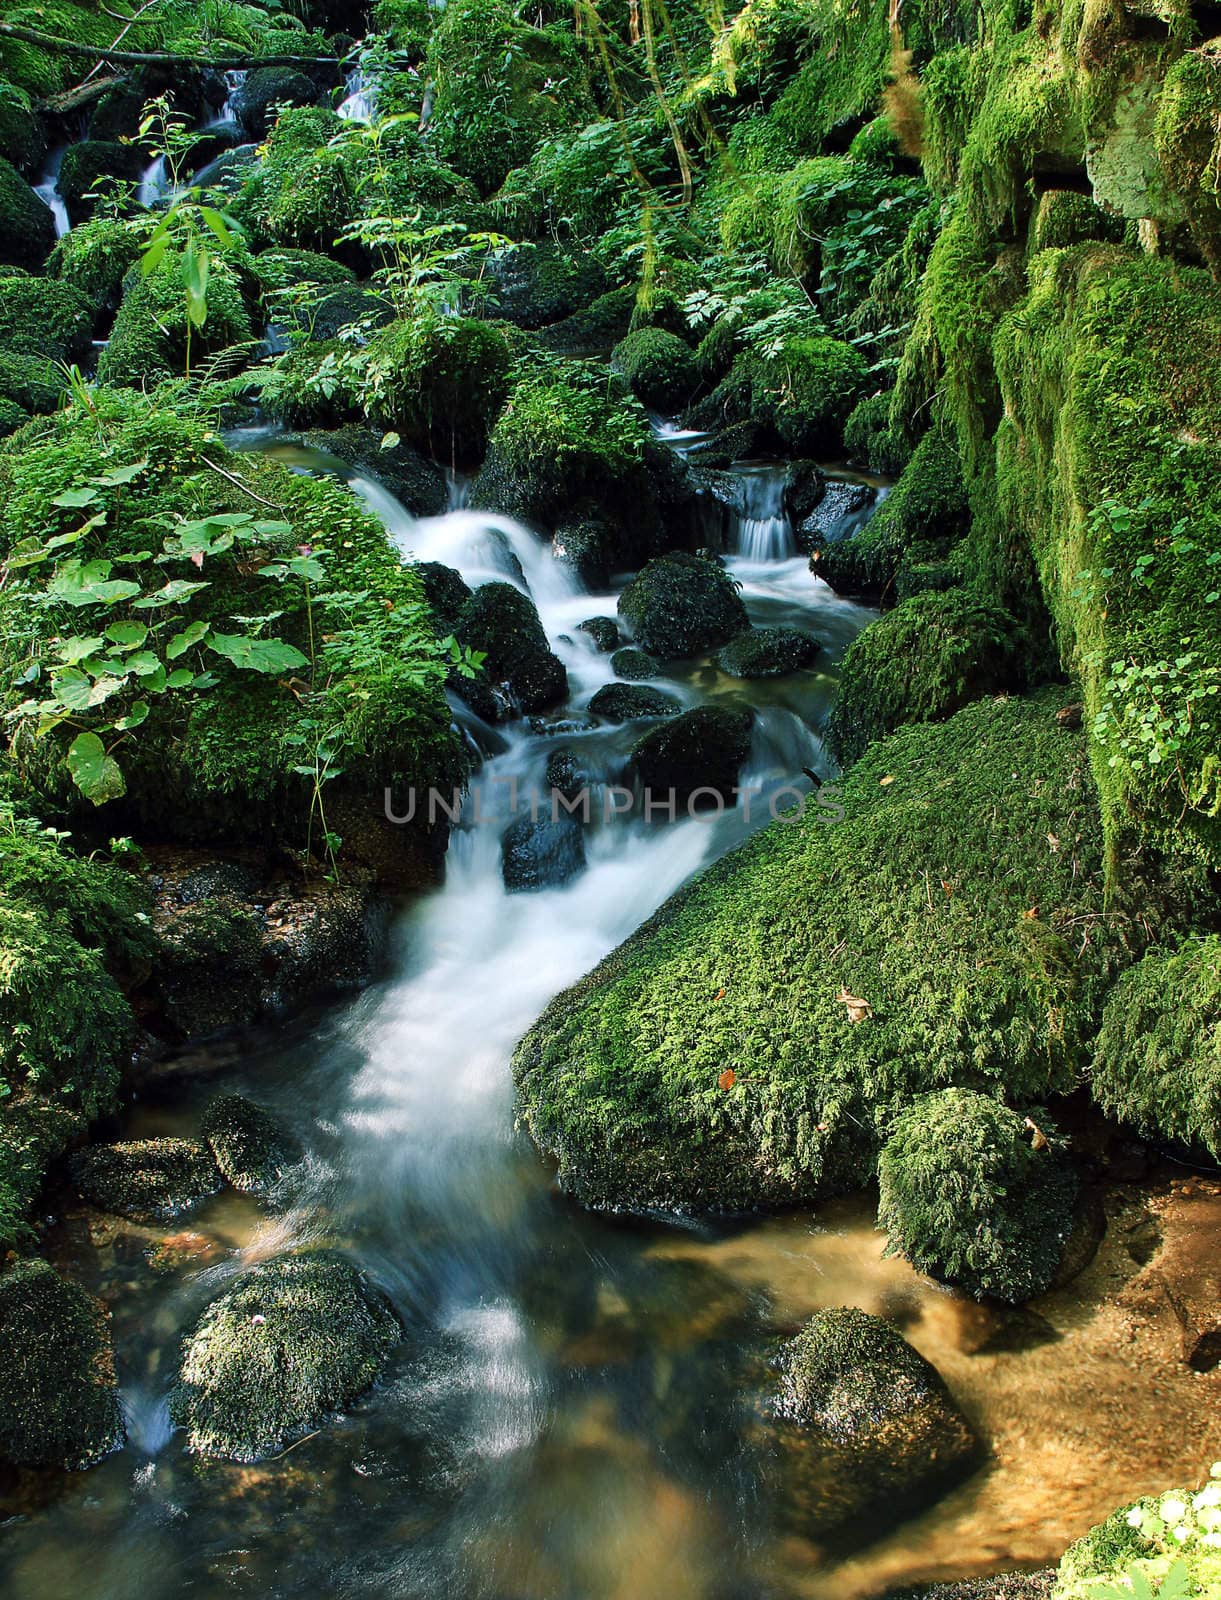 little flowing river in beautiful green natrure